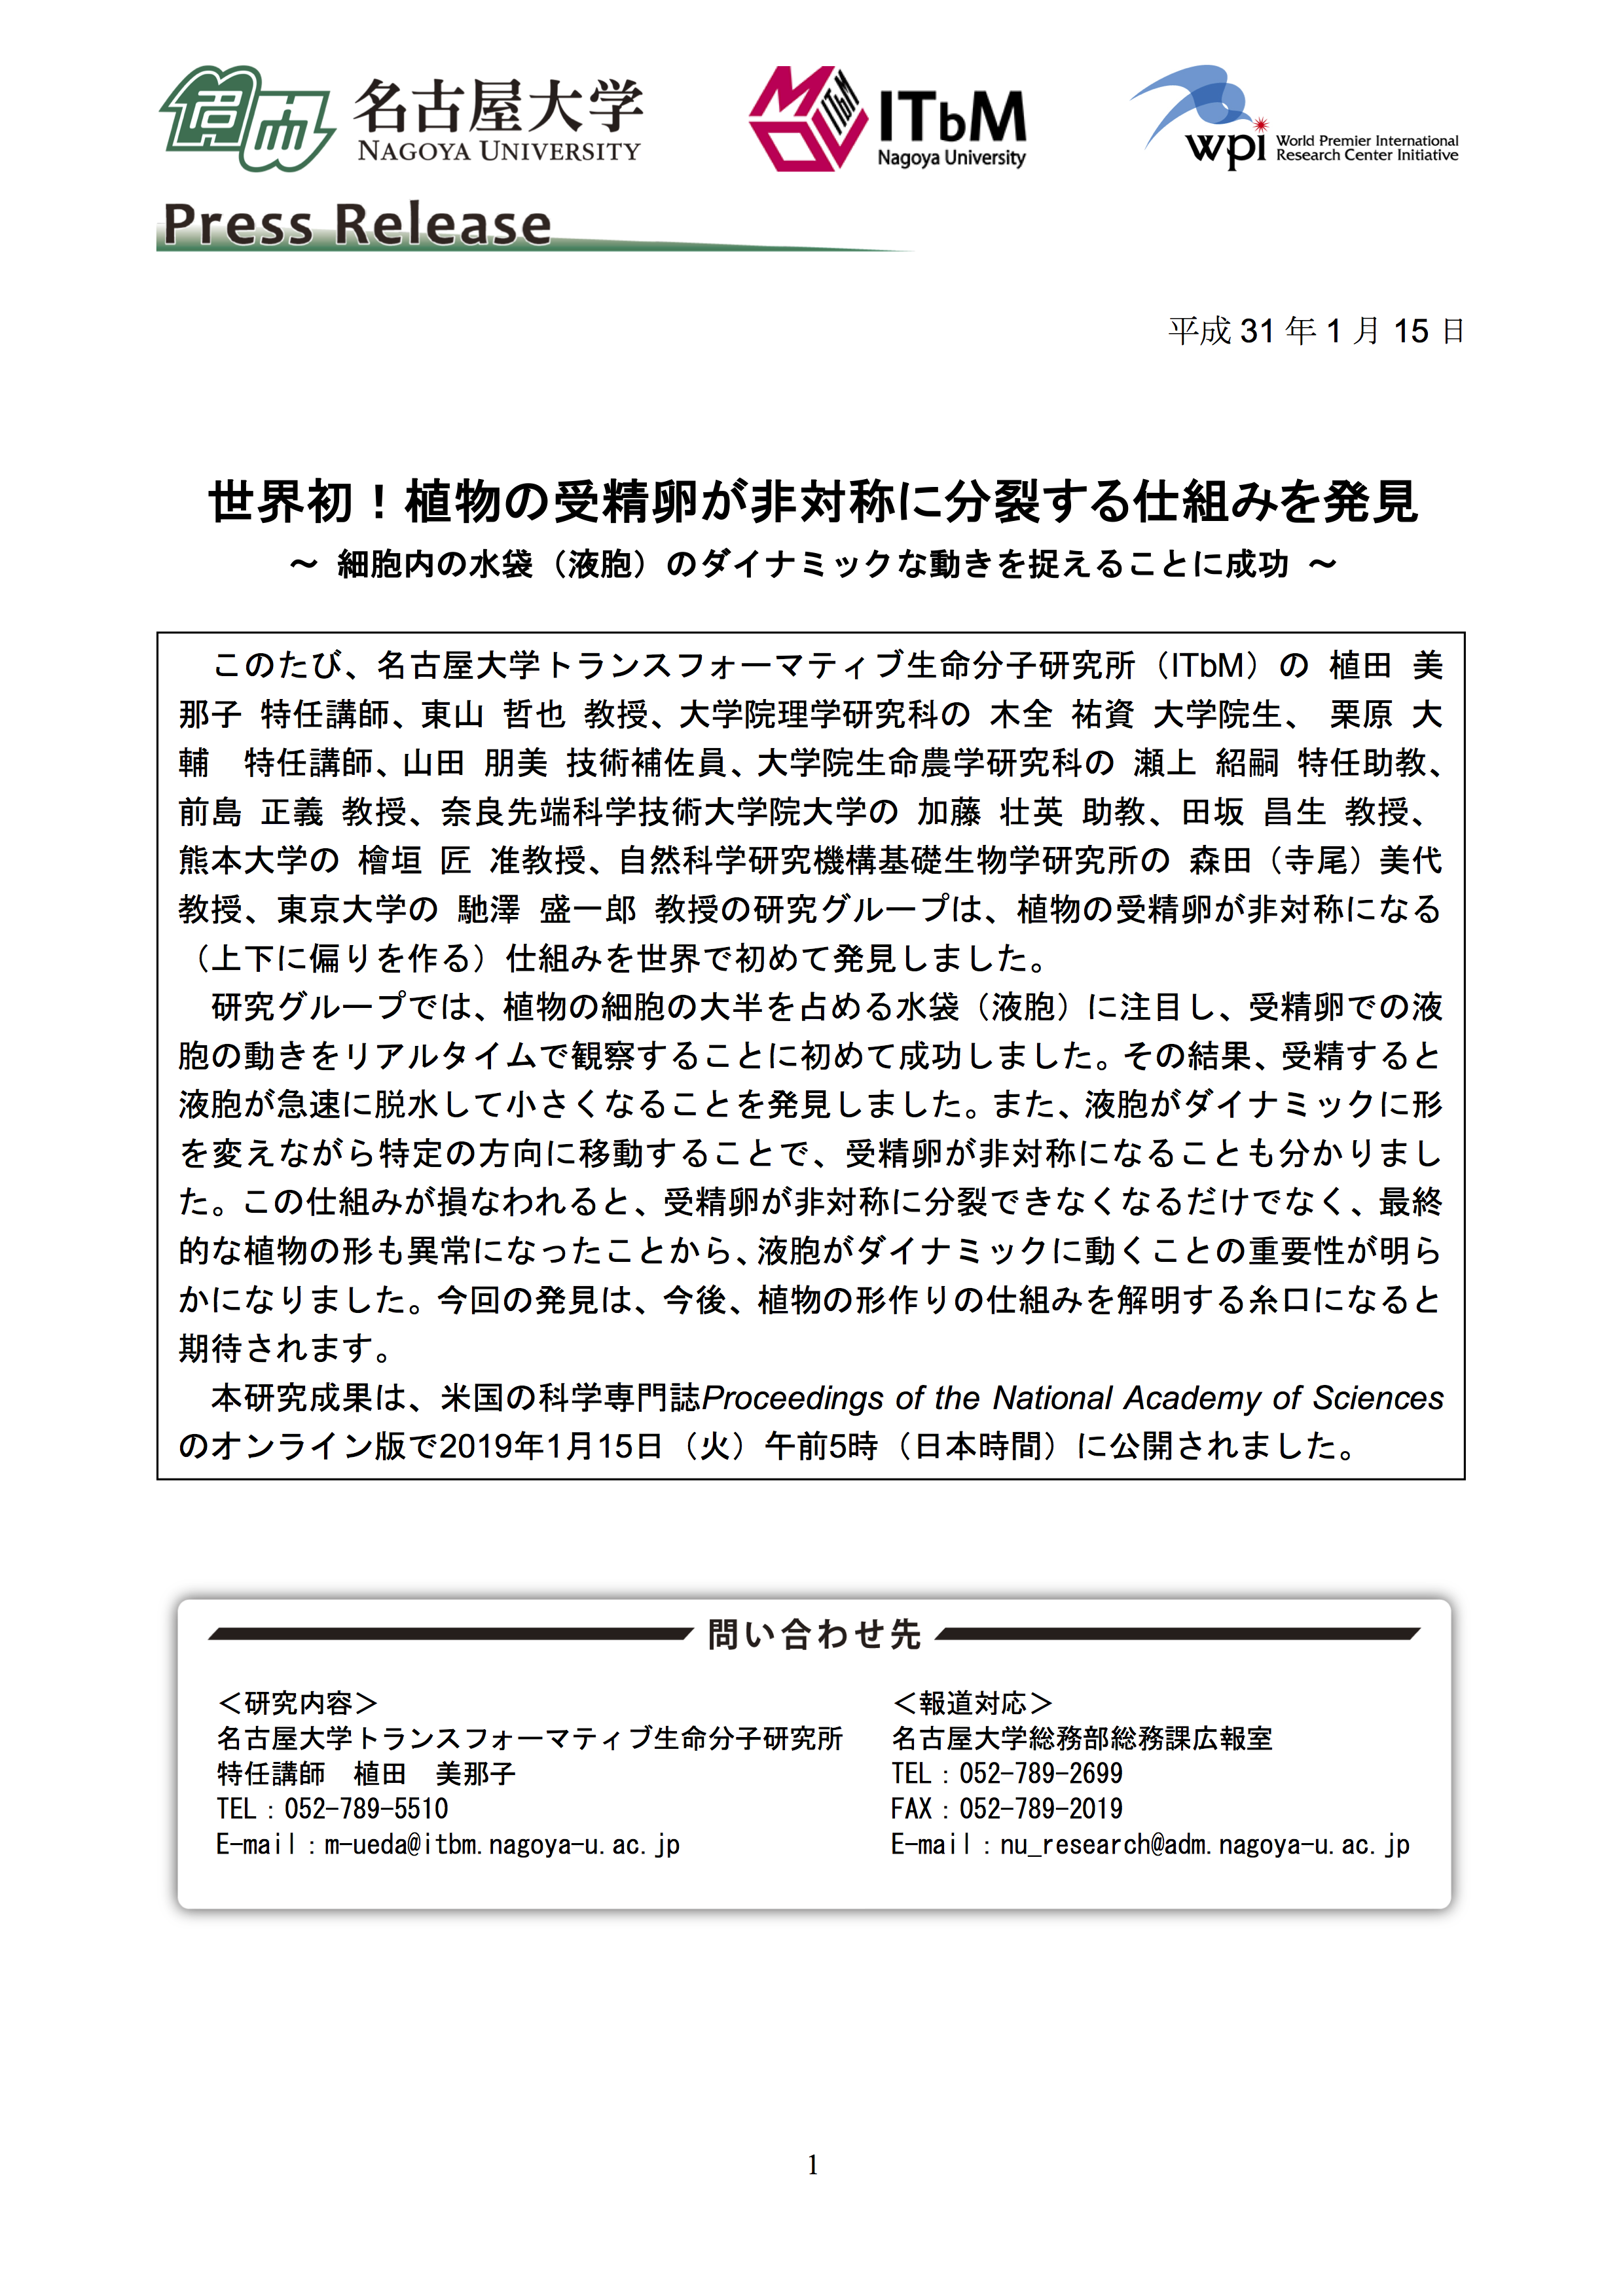 http://www.itbm.nagoya-u.ac.jp/ja_backup/research/20190115_PANS_ueda_ja_PressRelease.png